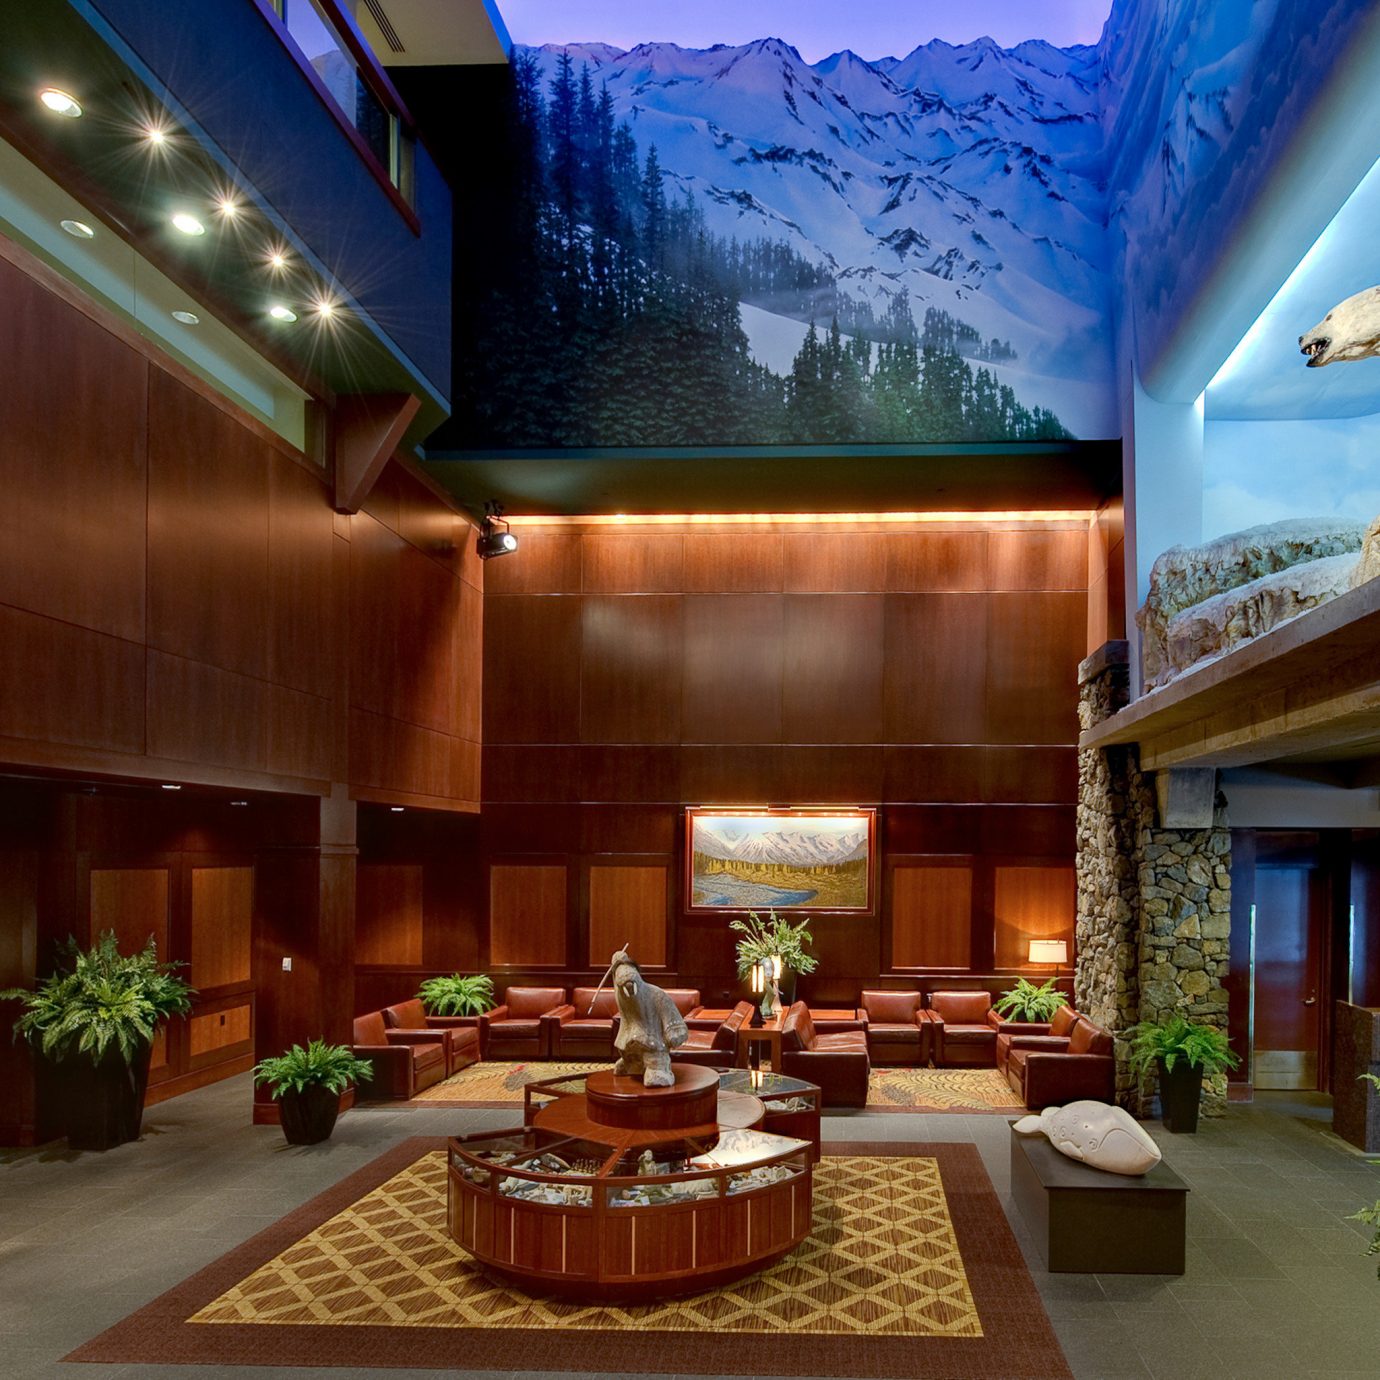 Business Lobby Lounge Trip Ideas home screenshot mansion Resort living room